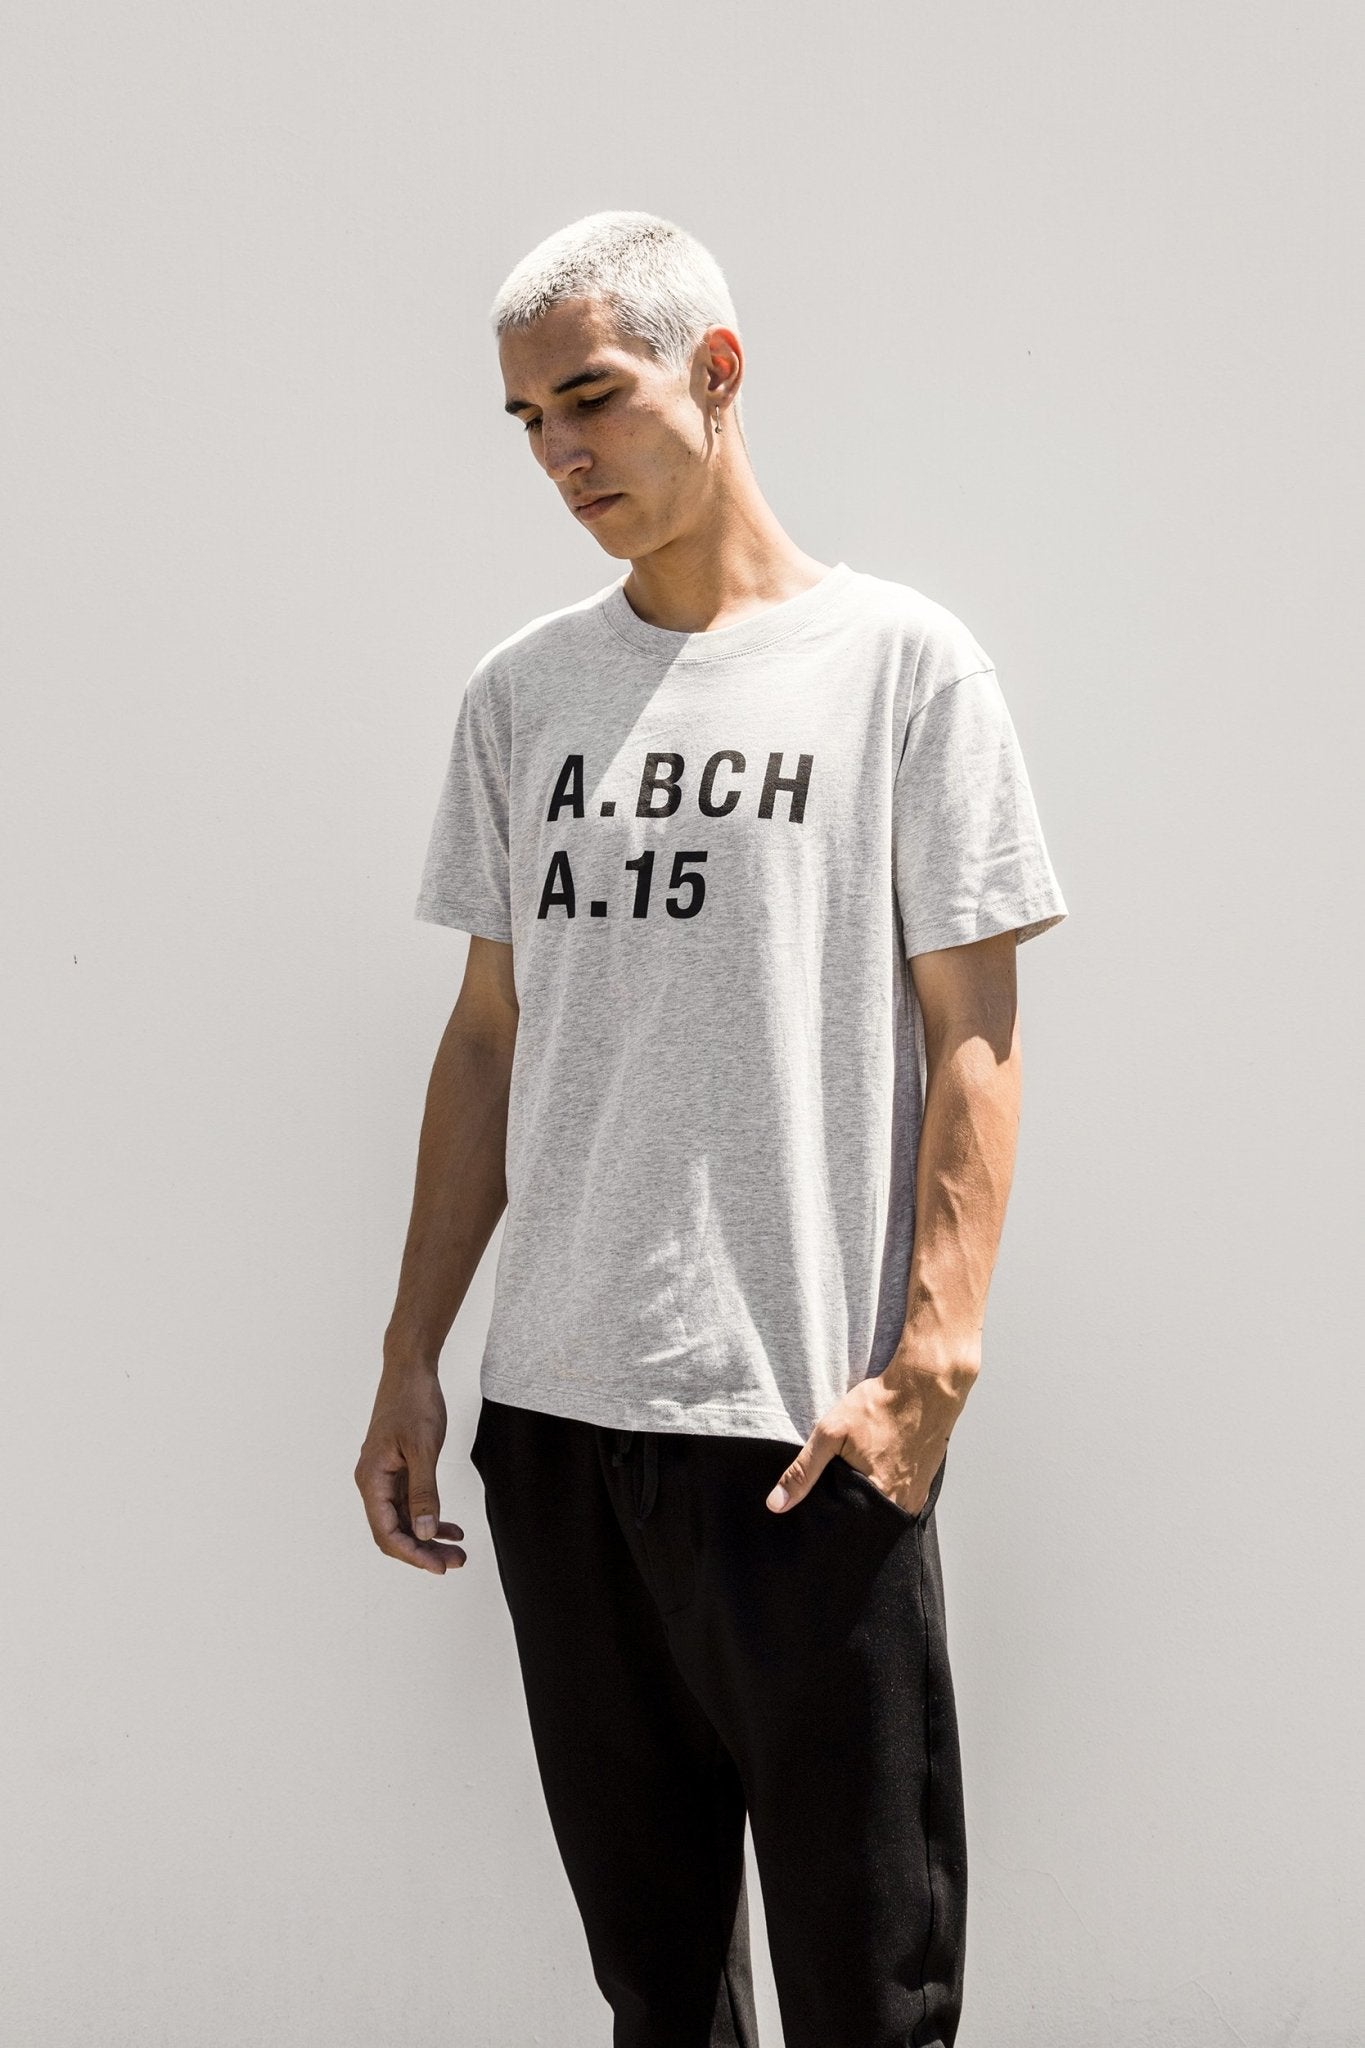 A.BCHA.15T-shirtA15-FT-CL-WH-XSXS